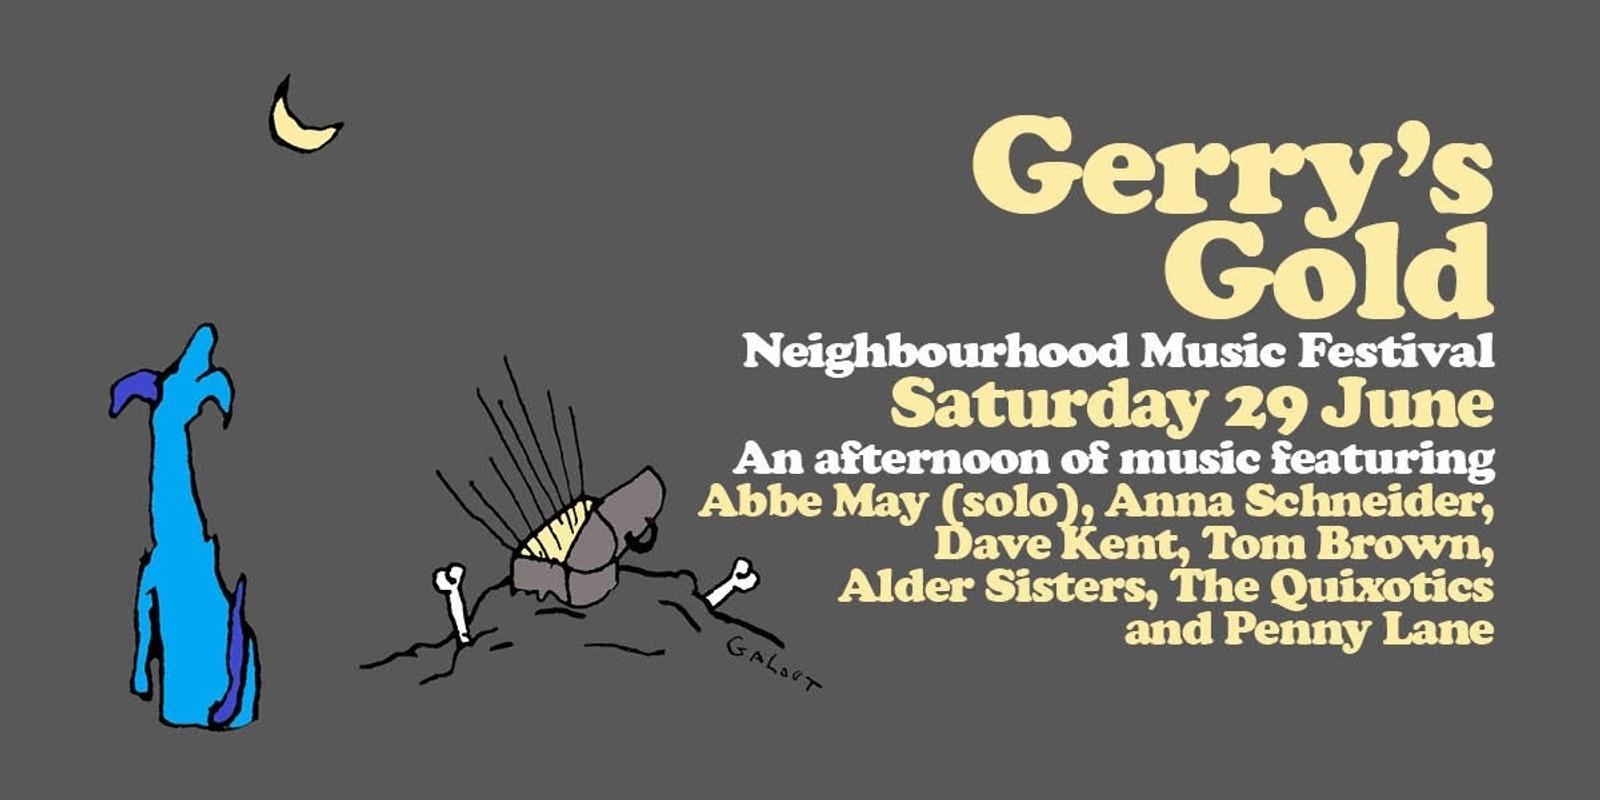 Banner image for “Gerry’s Gold” Neighbourhood Music Festival